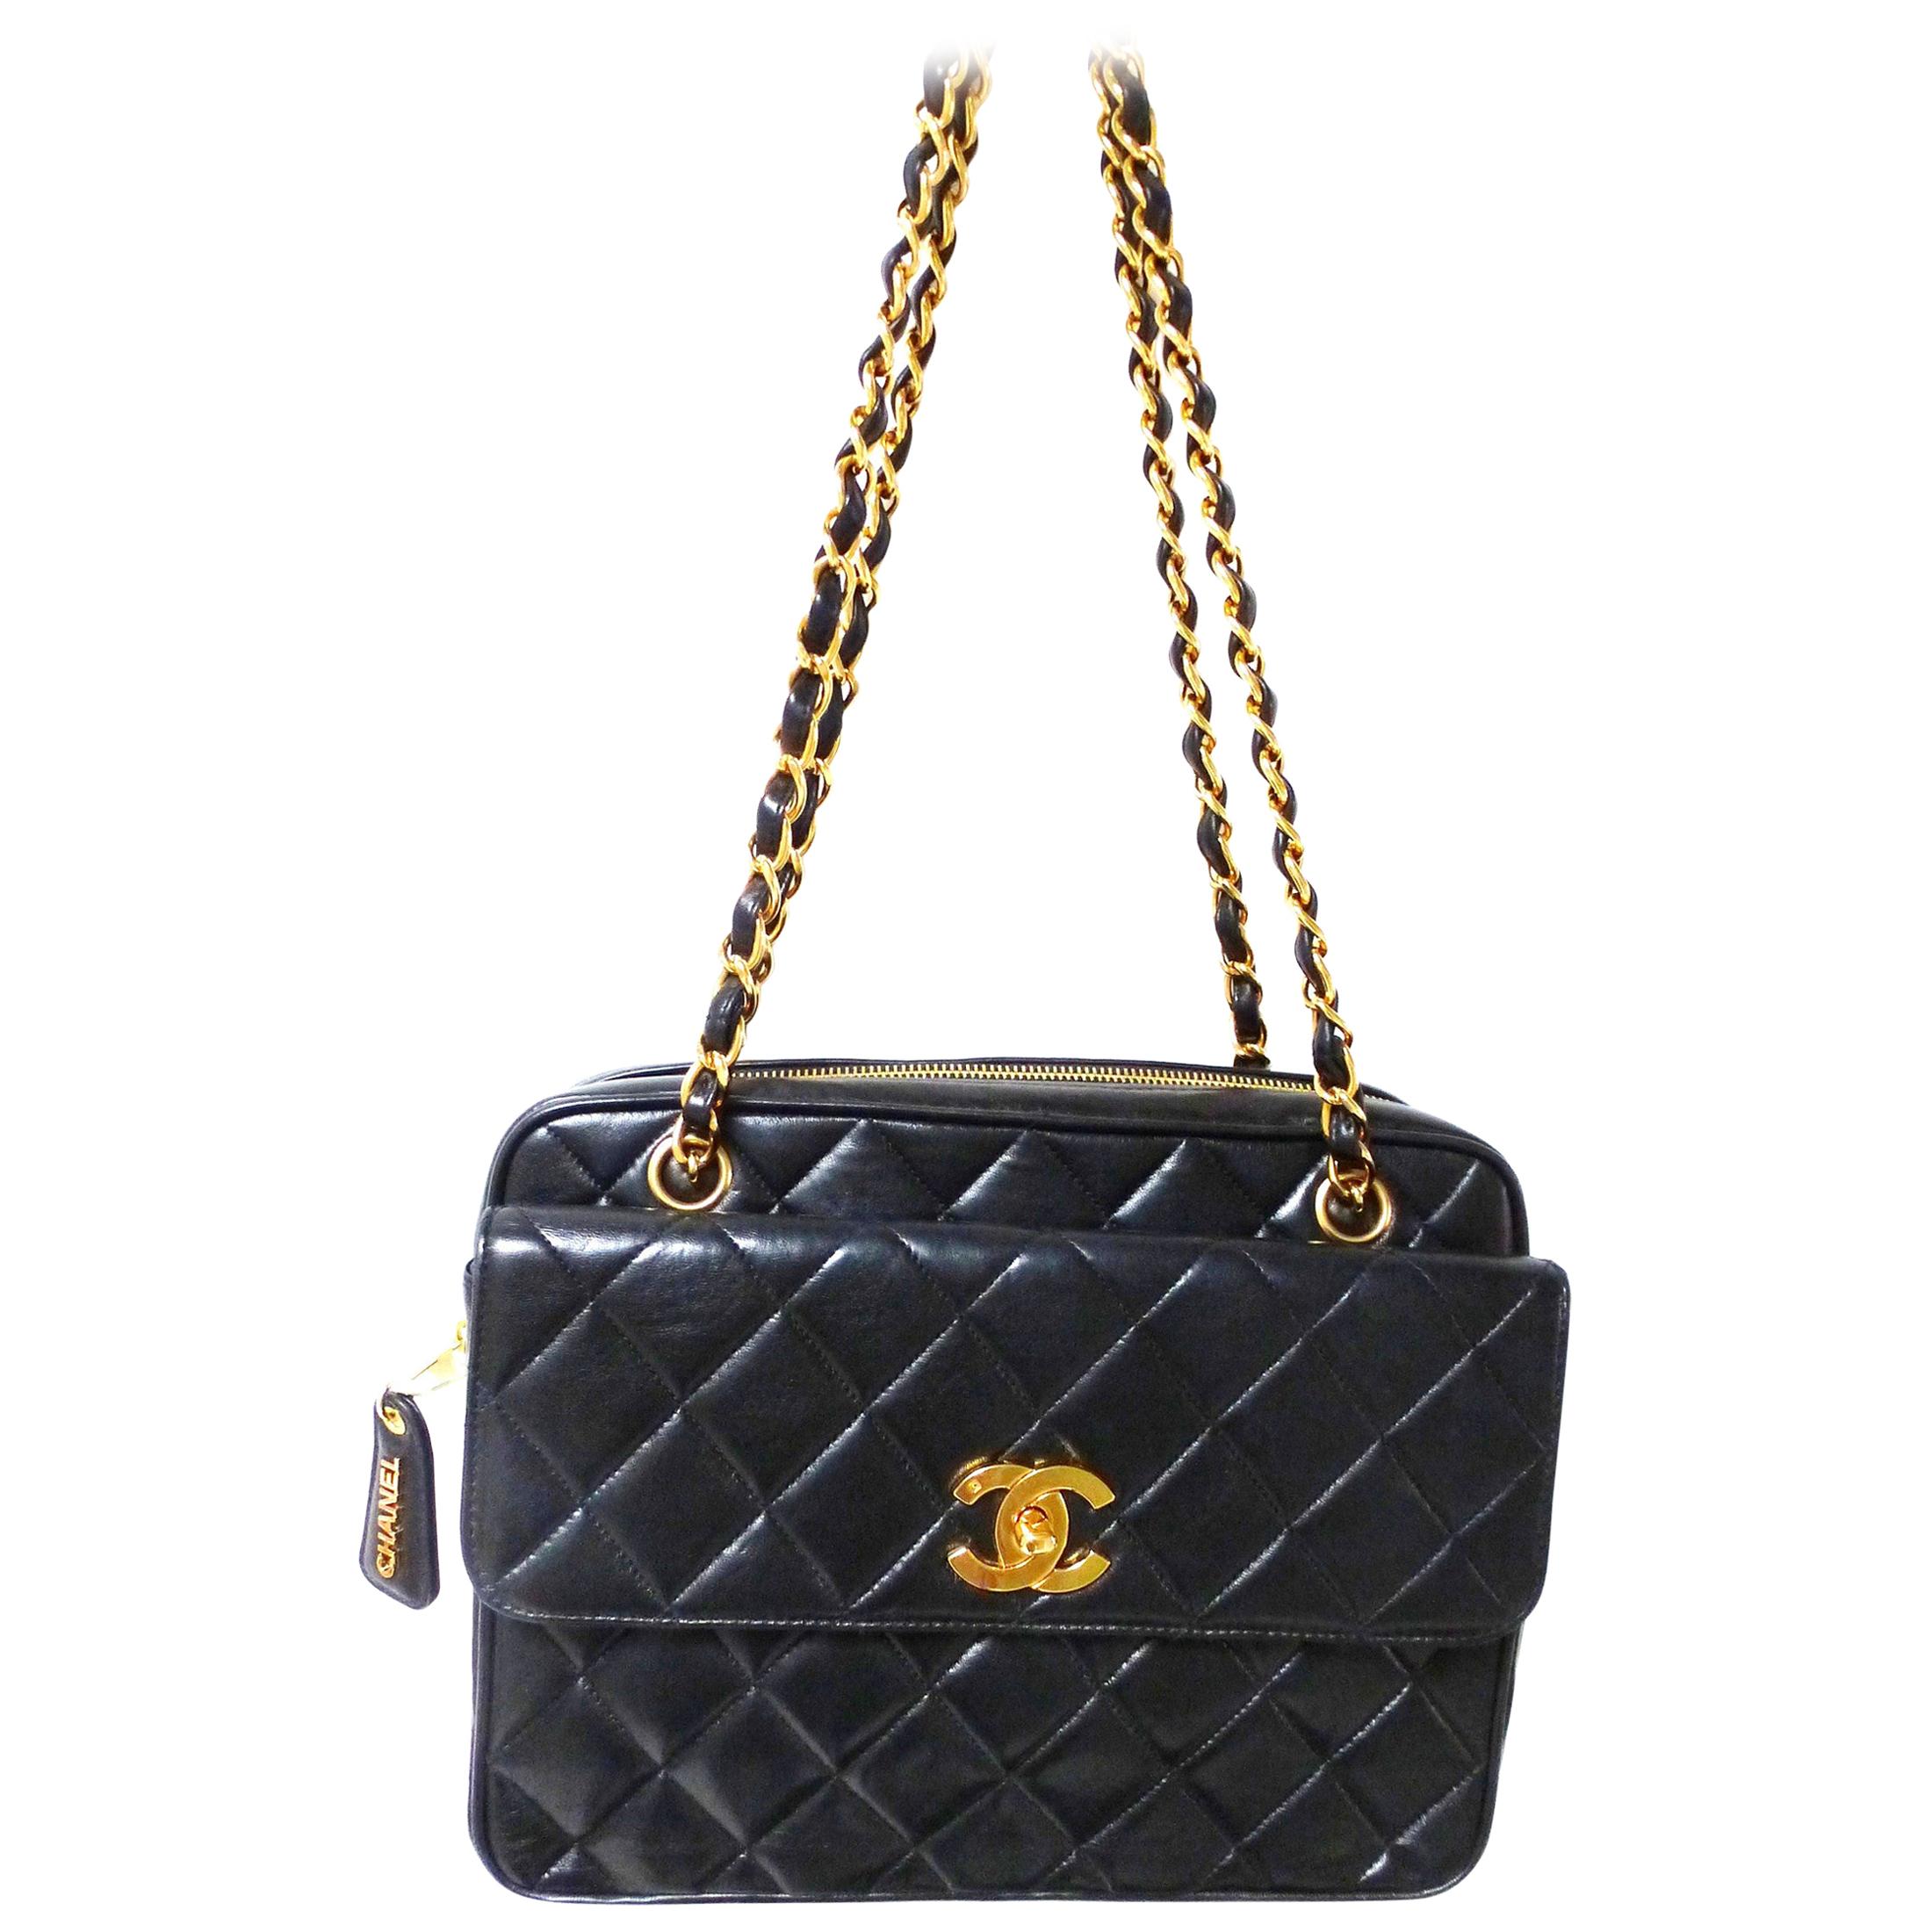 Vintage Chanel shoulder bag black quilted lambskin, 2 handle chains, 1995s